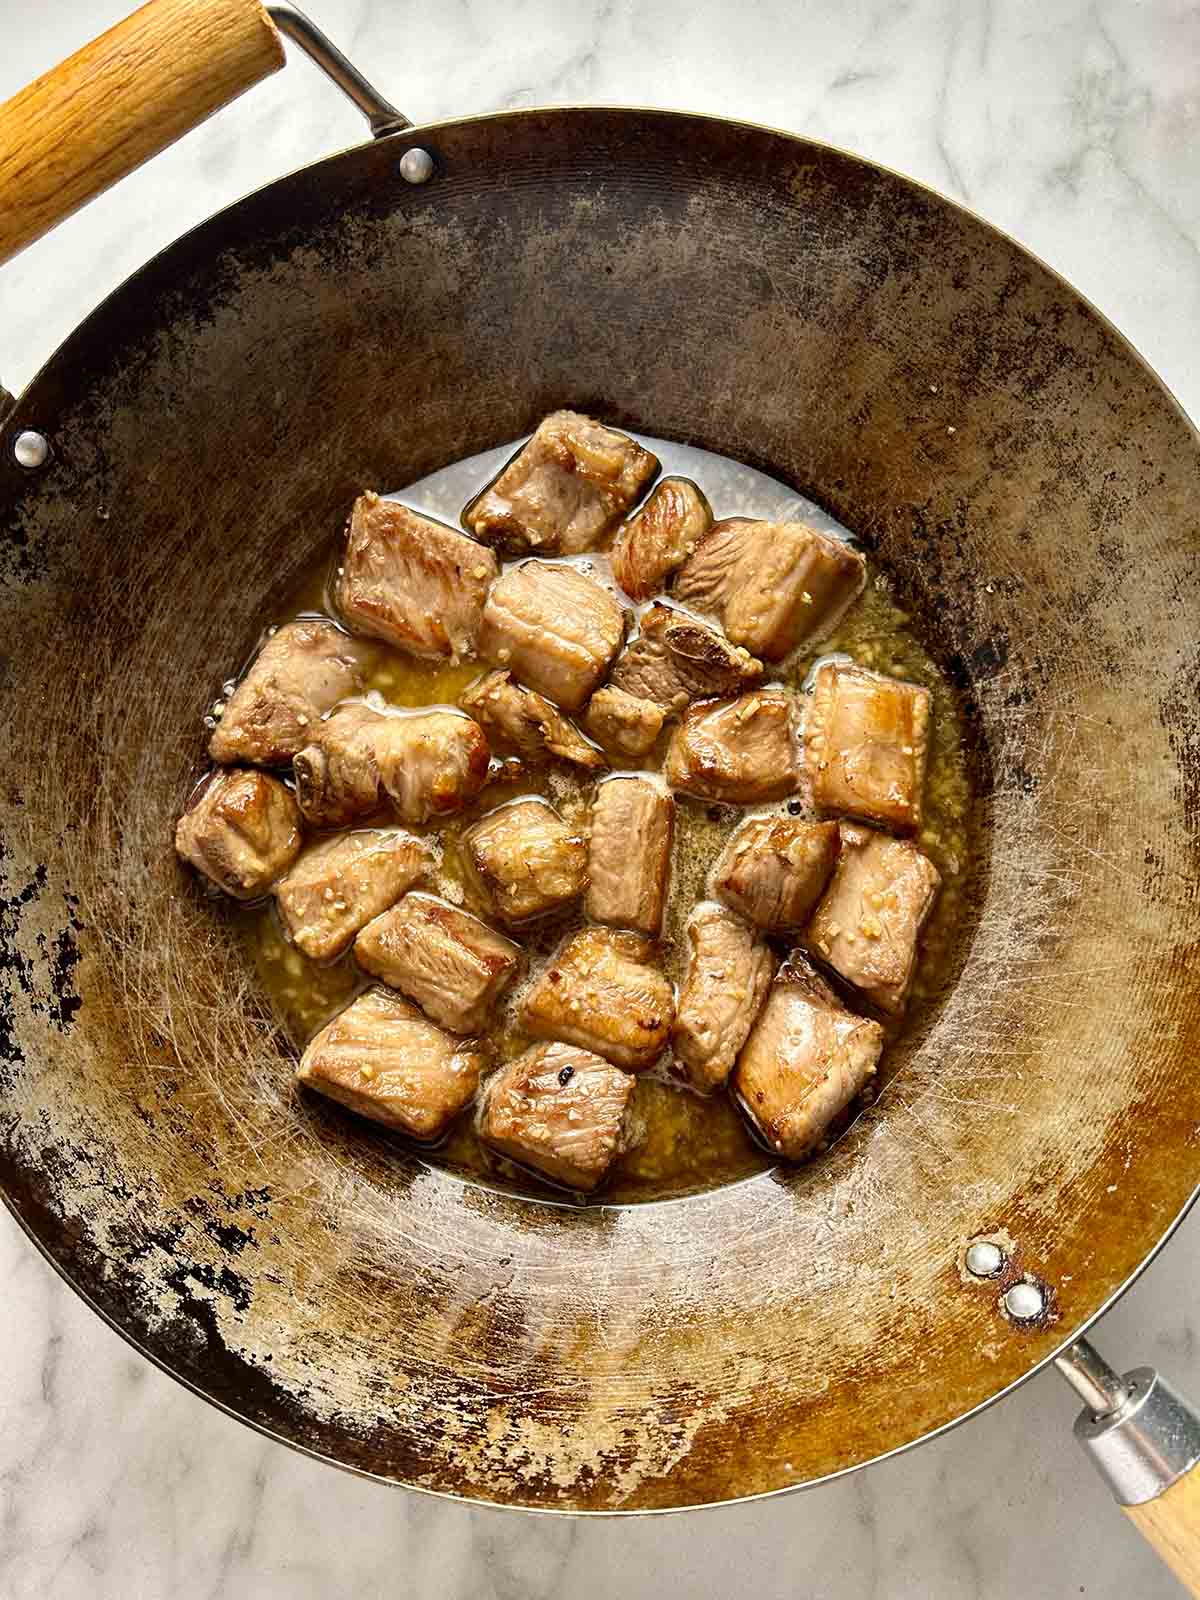 ribs simmering in sauce in wok